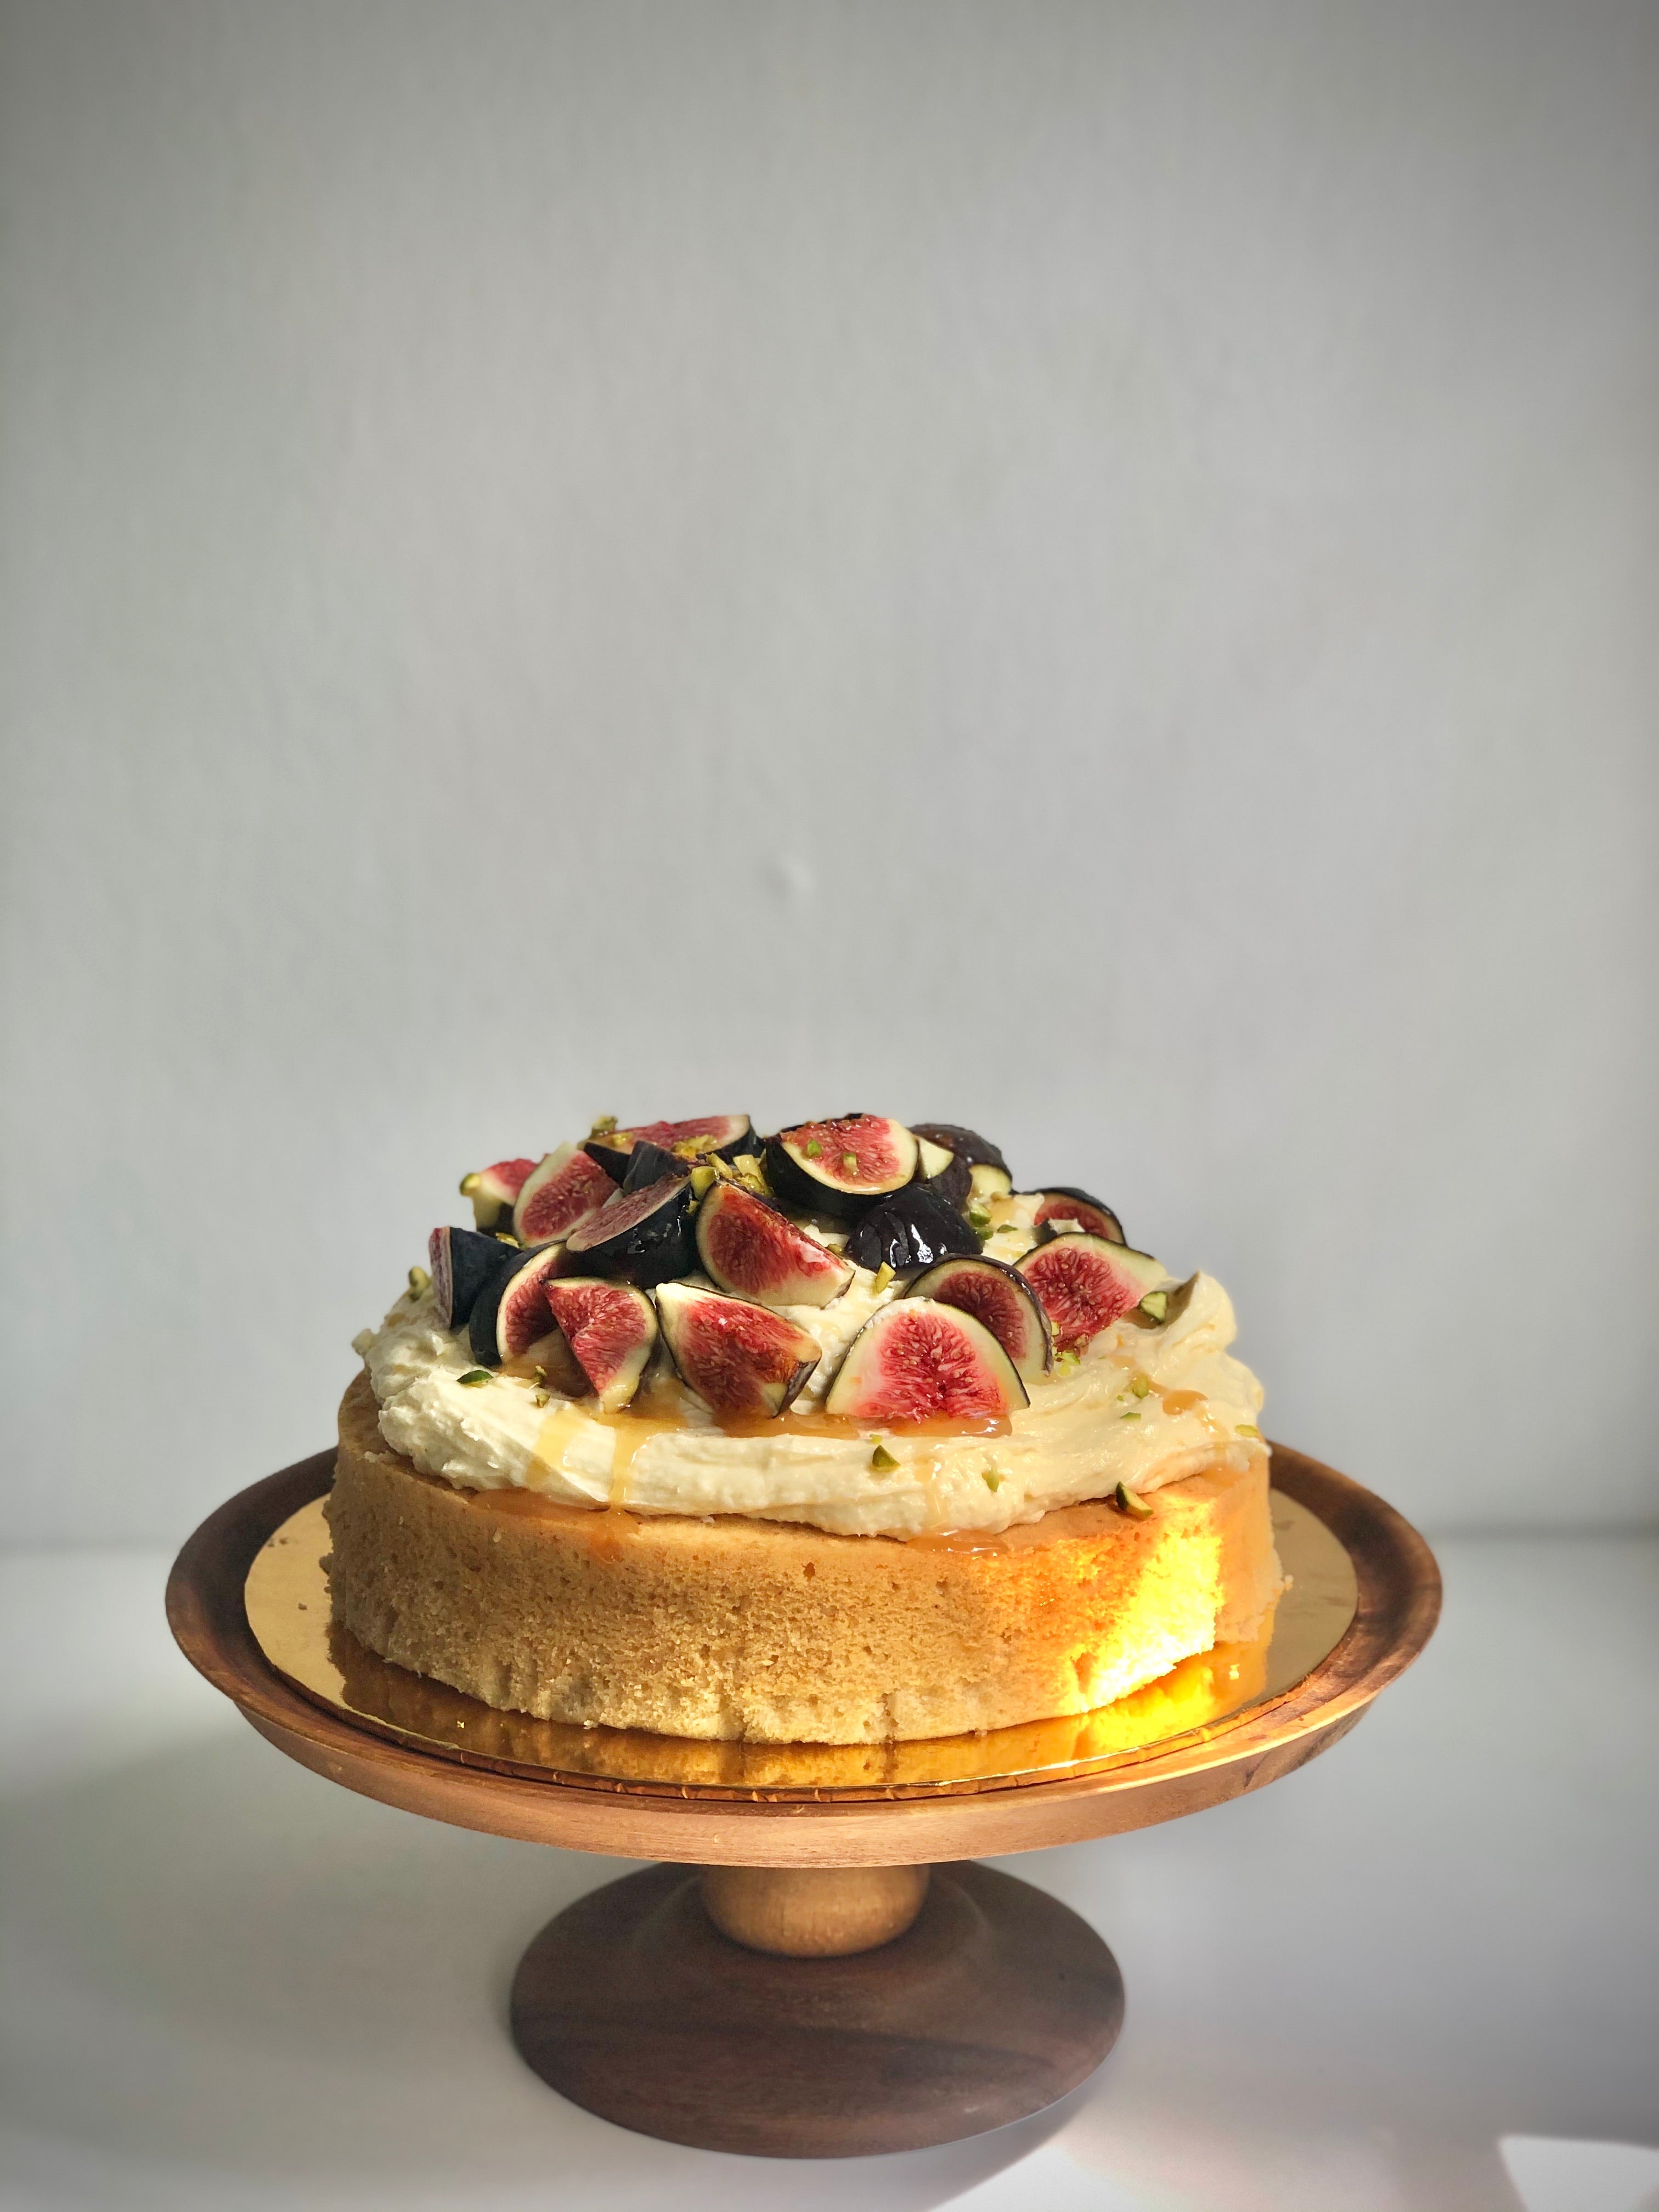 Share more than 72 badam cashew cake - in.daotaonec